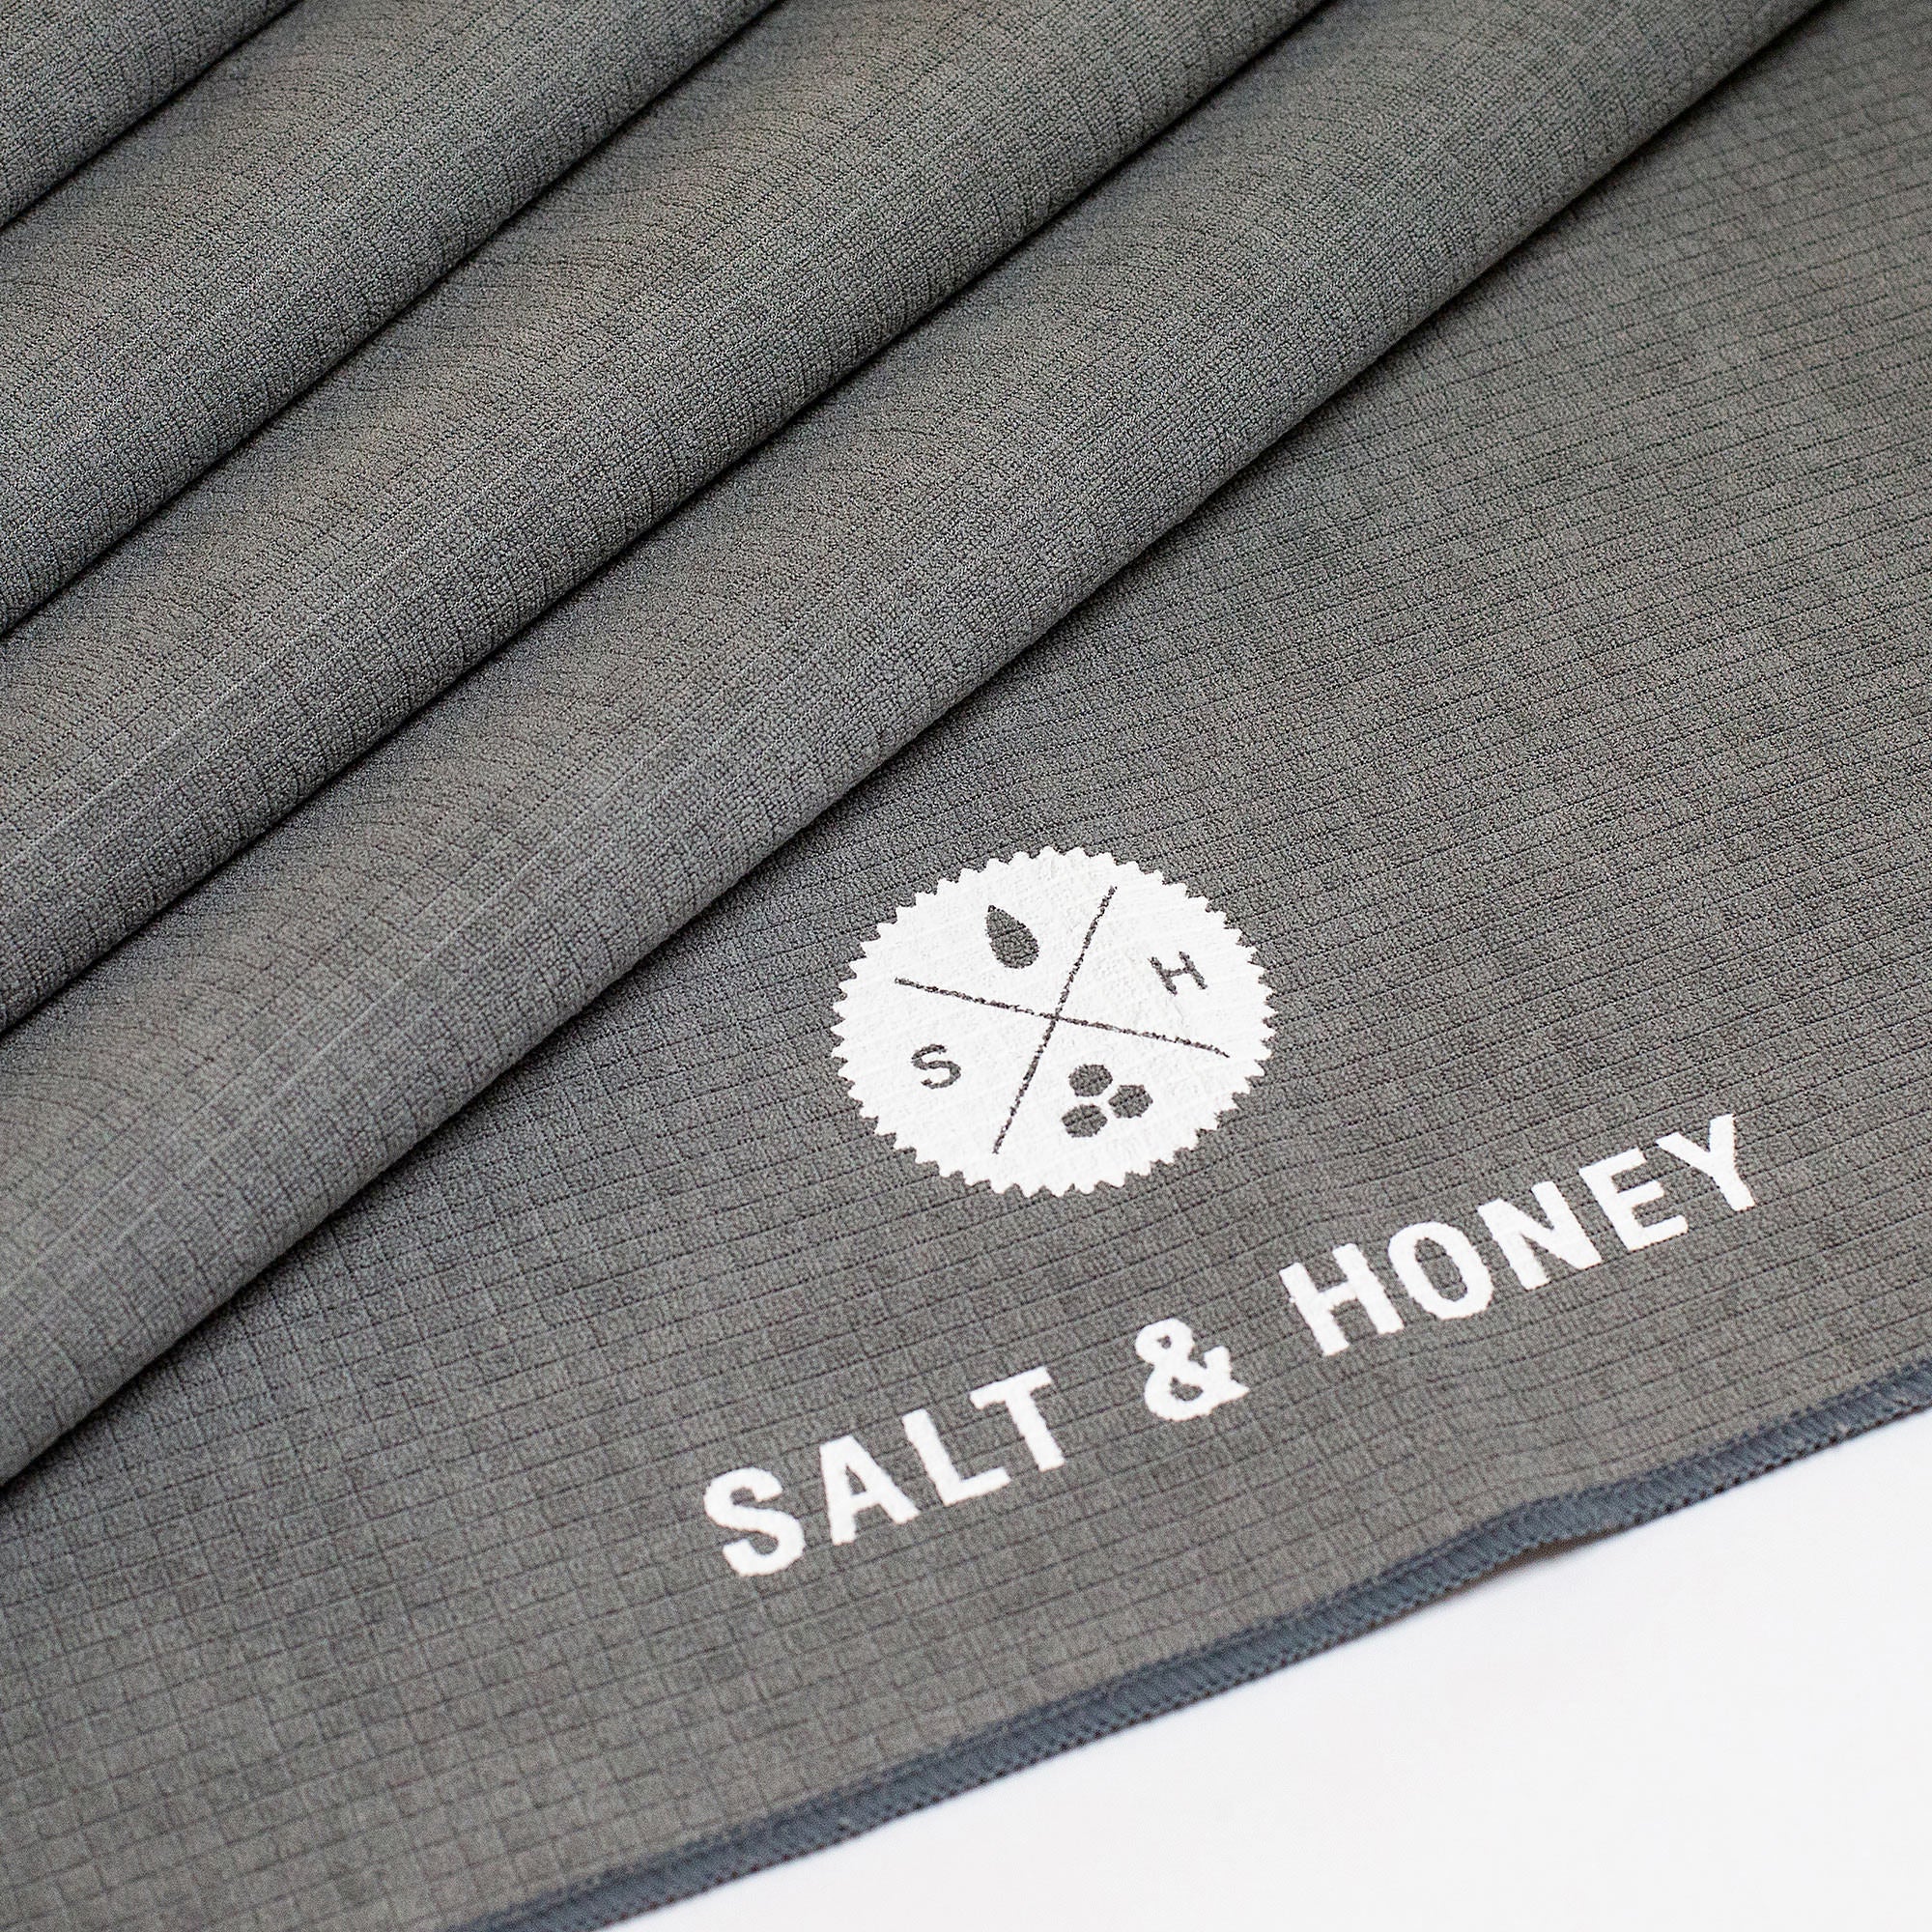 NEW Salt & Honey Non-Slip Pilates Reformer Towel and Workout Mat - Blue